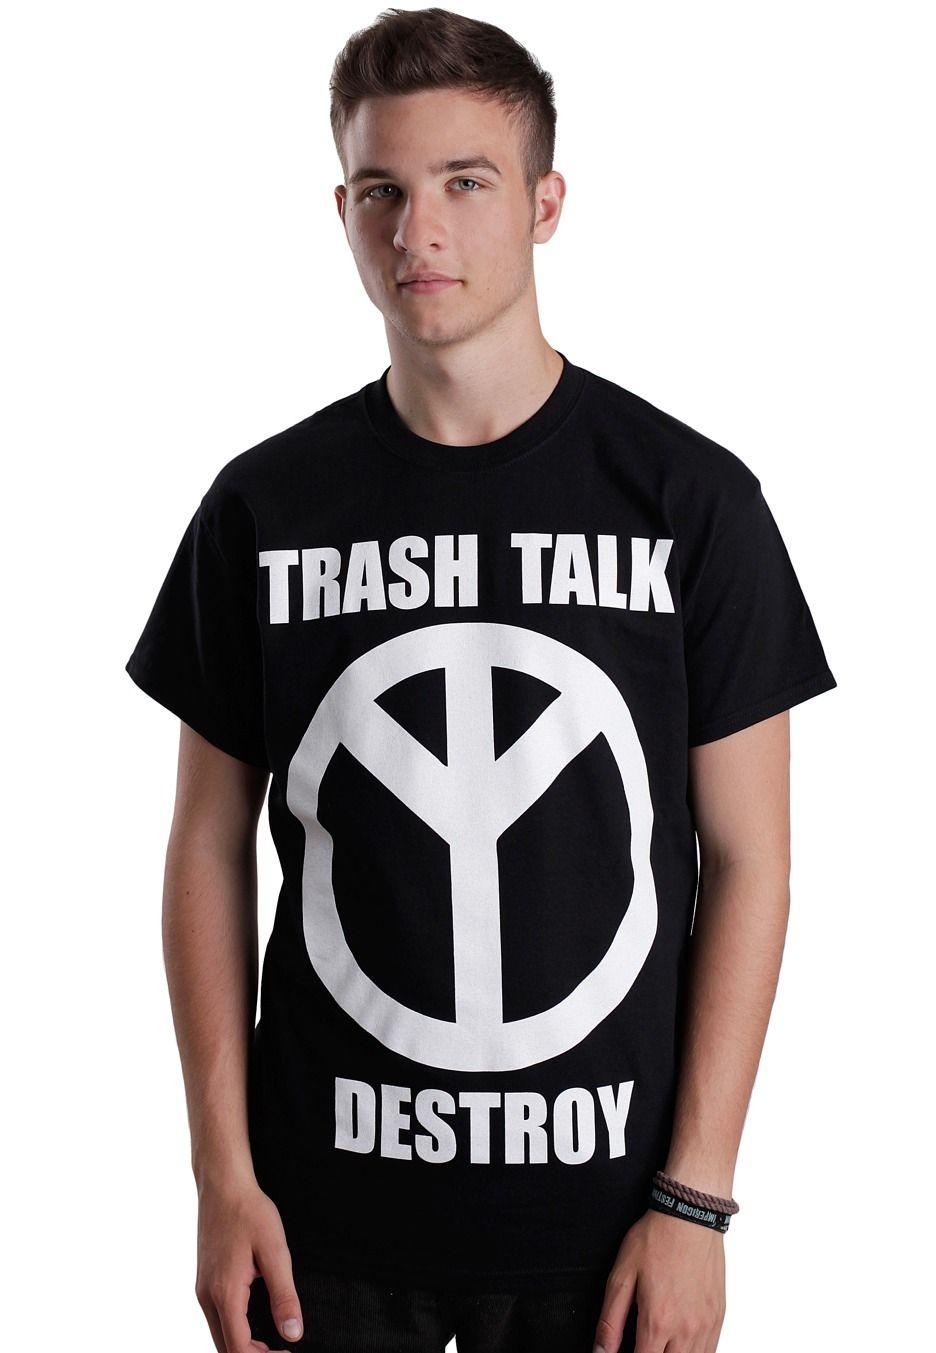 Trash Talk Logo - Trash Talk Destroy Shirt.com AU